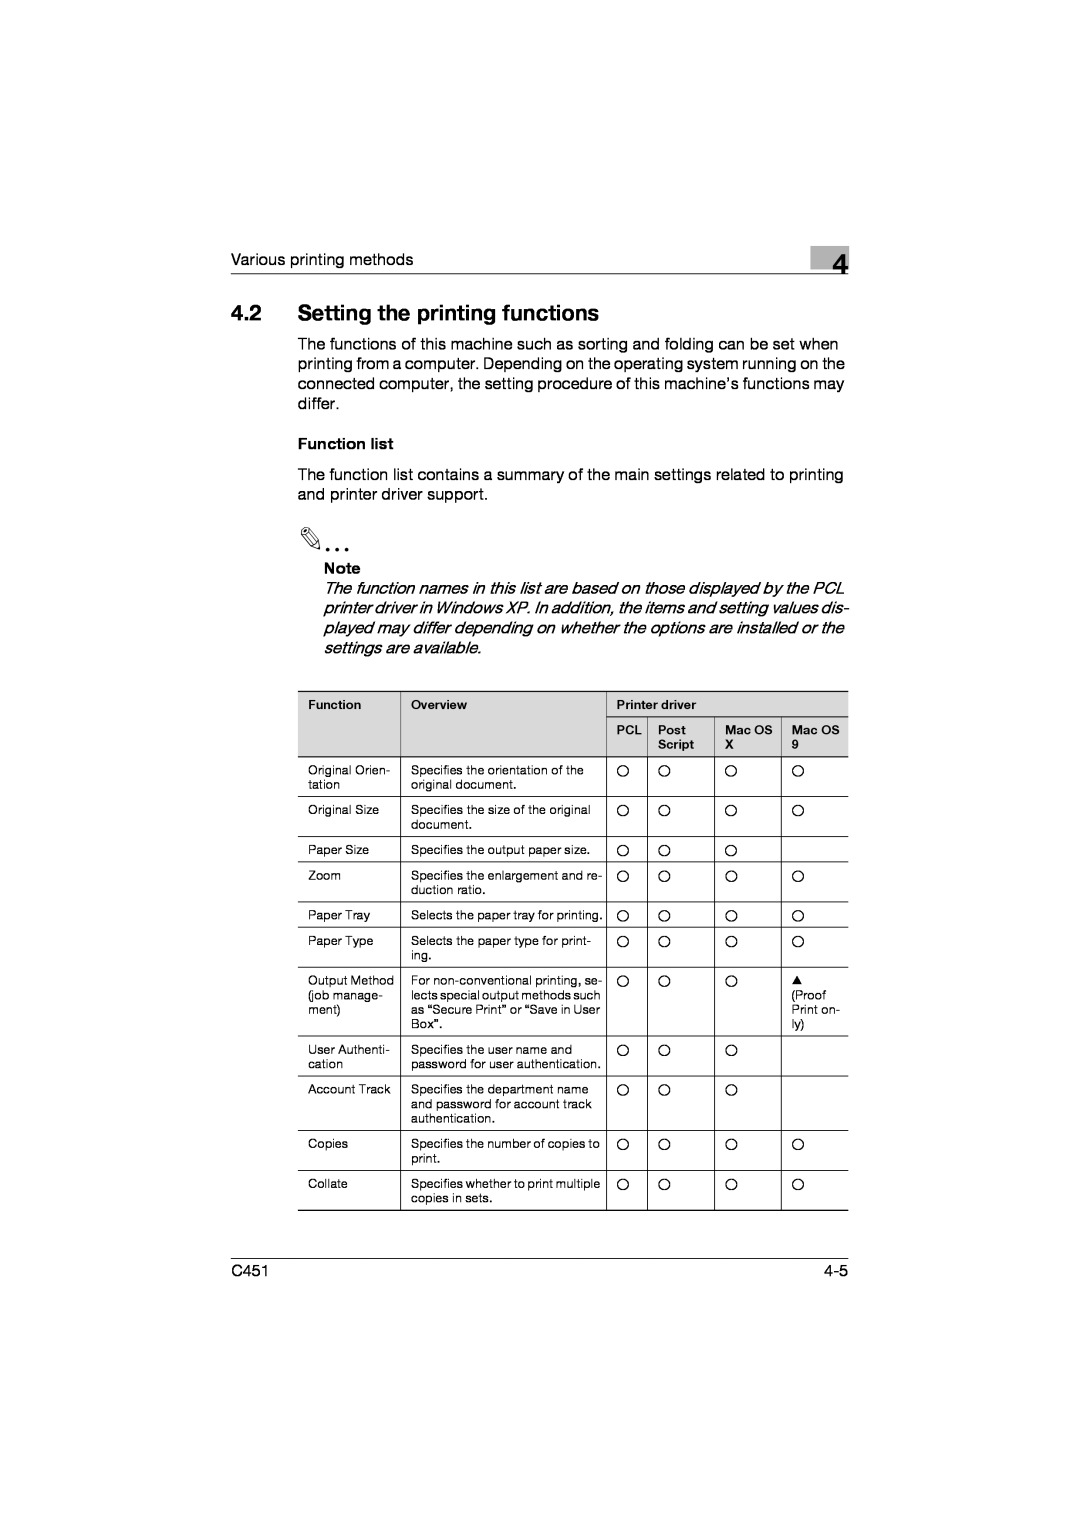 Konica Minolta C451 manual 4.2Setting the printing functions, Function list 